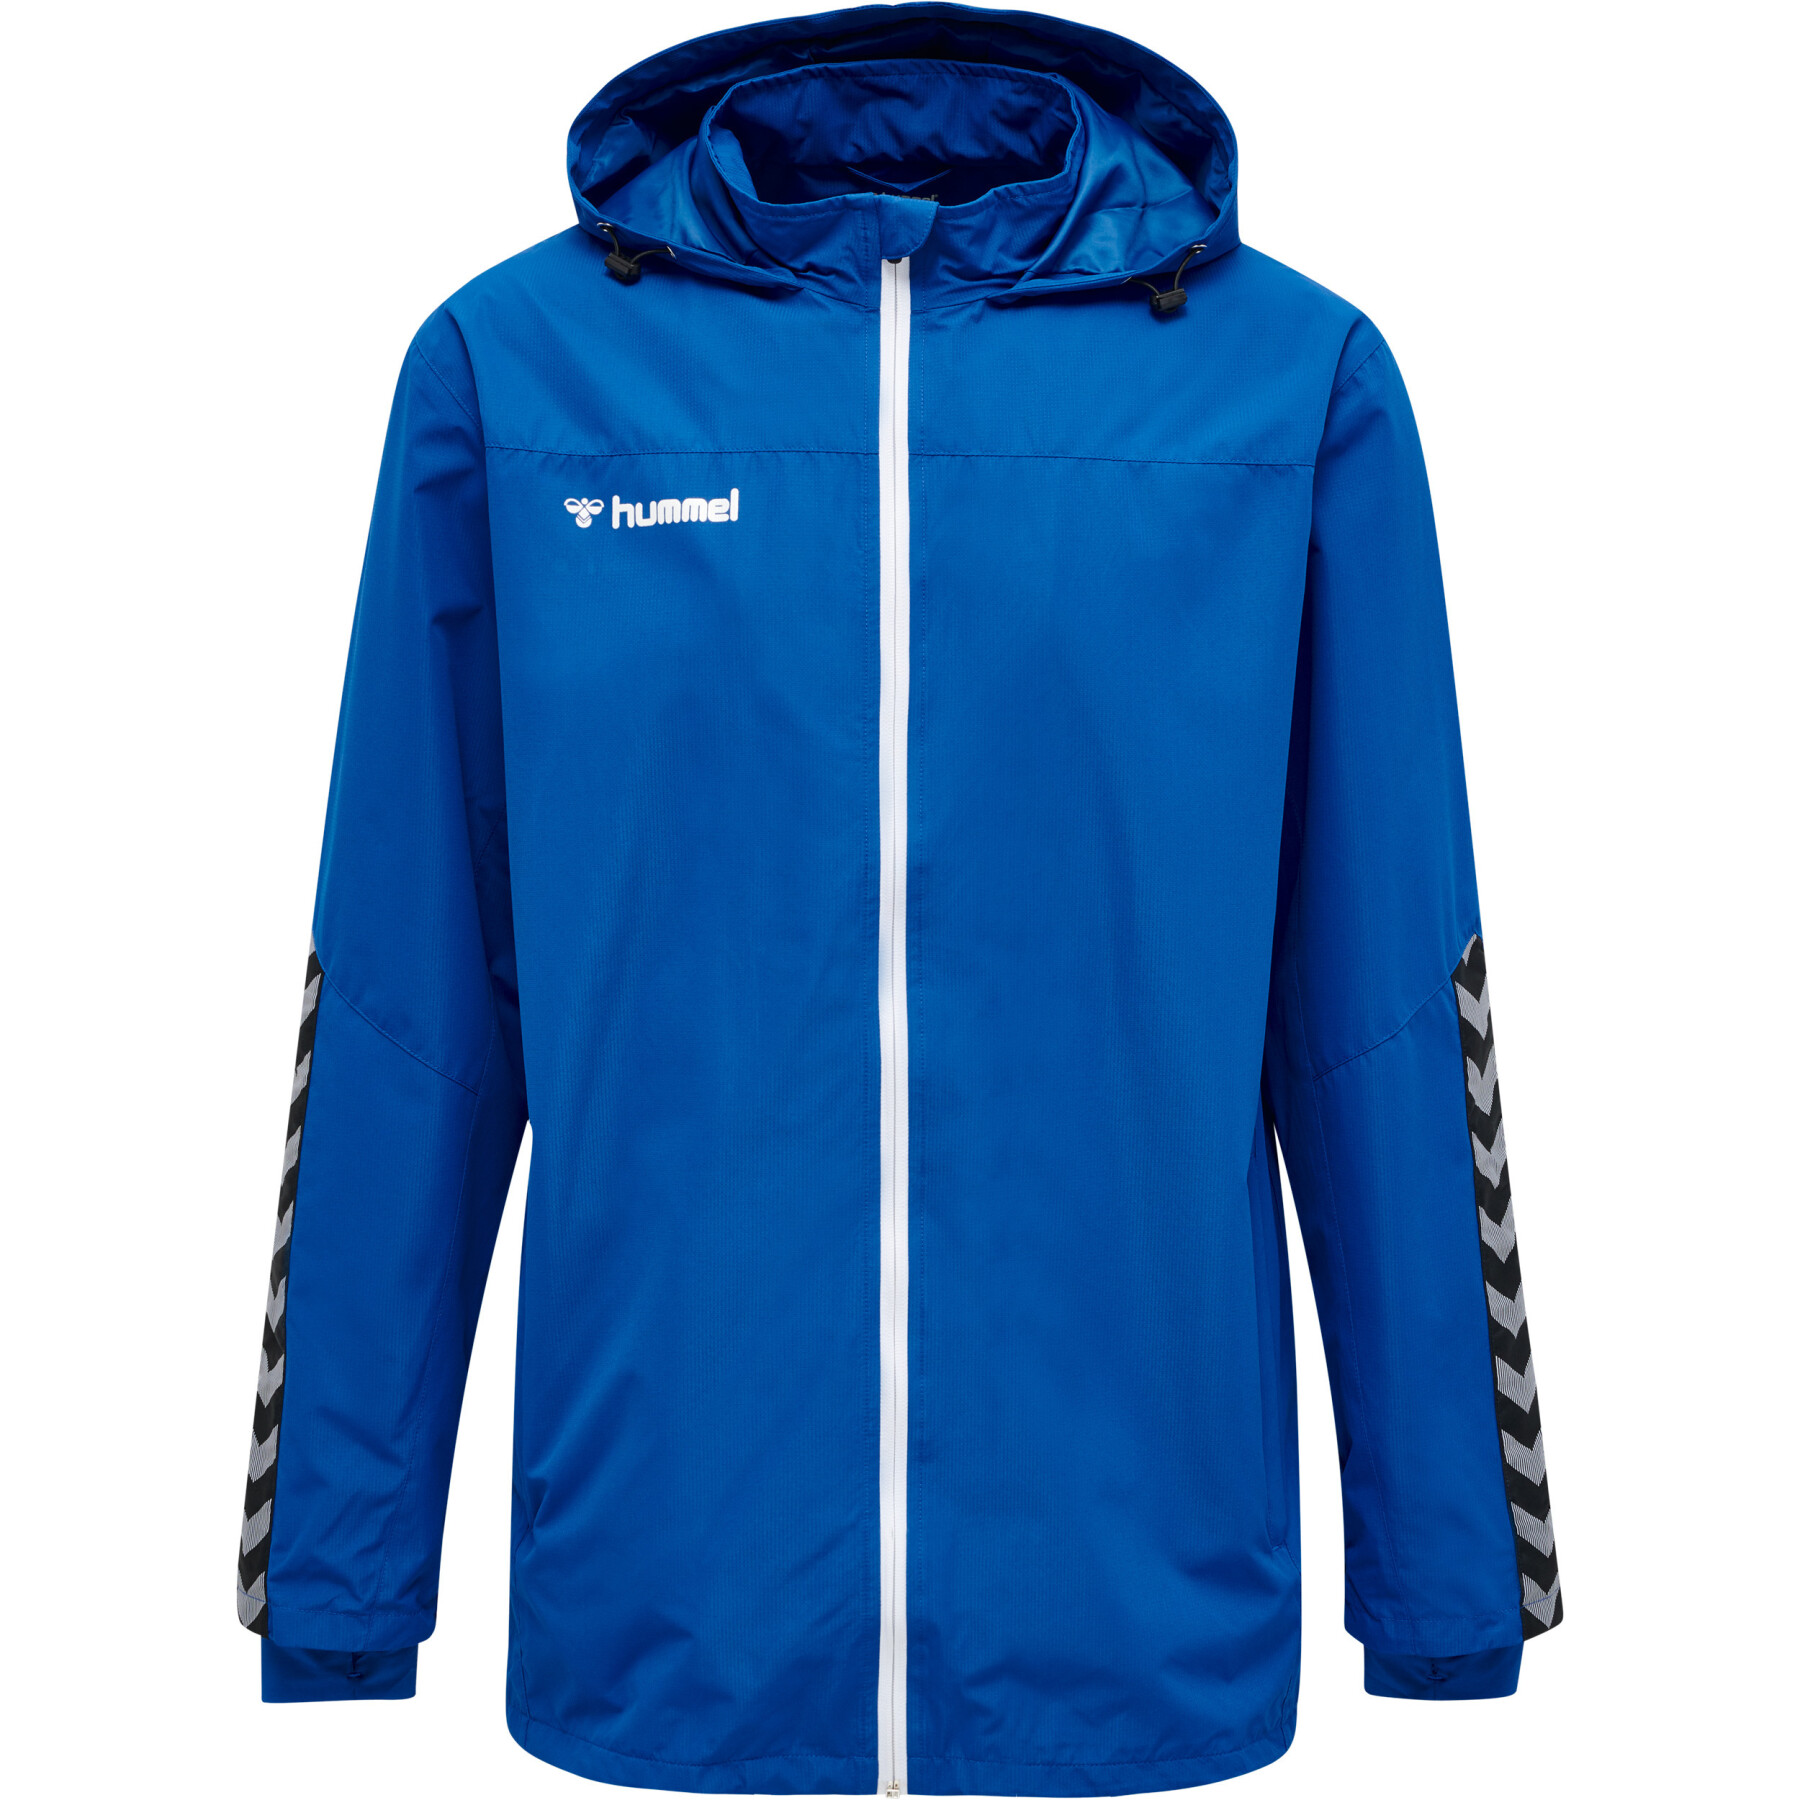 Hummel Handball Brands wear - Jacket - - Hummel Authenctic All-Weather